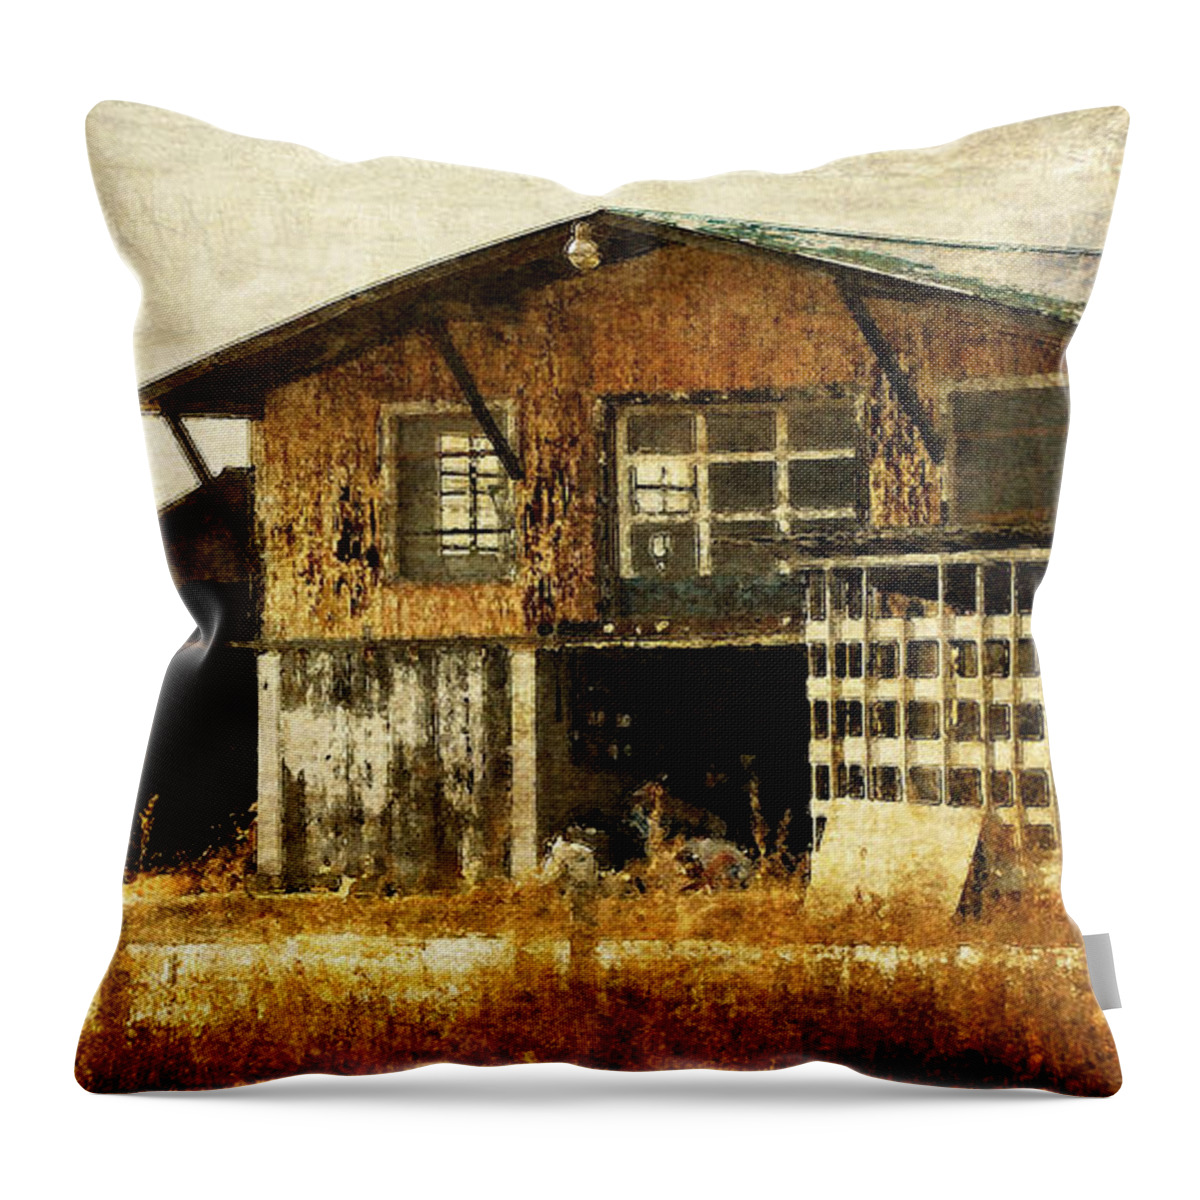 Farm Throw Pillow featuring the photograph Hard Labor by Lois Bryan